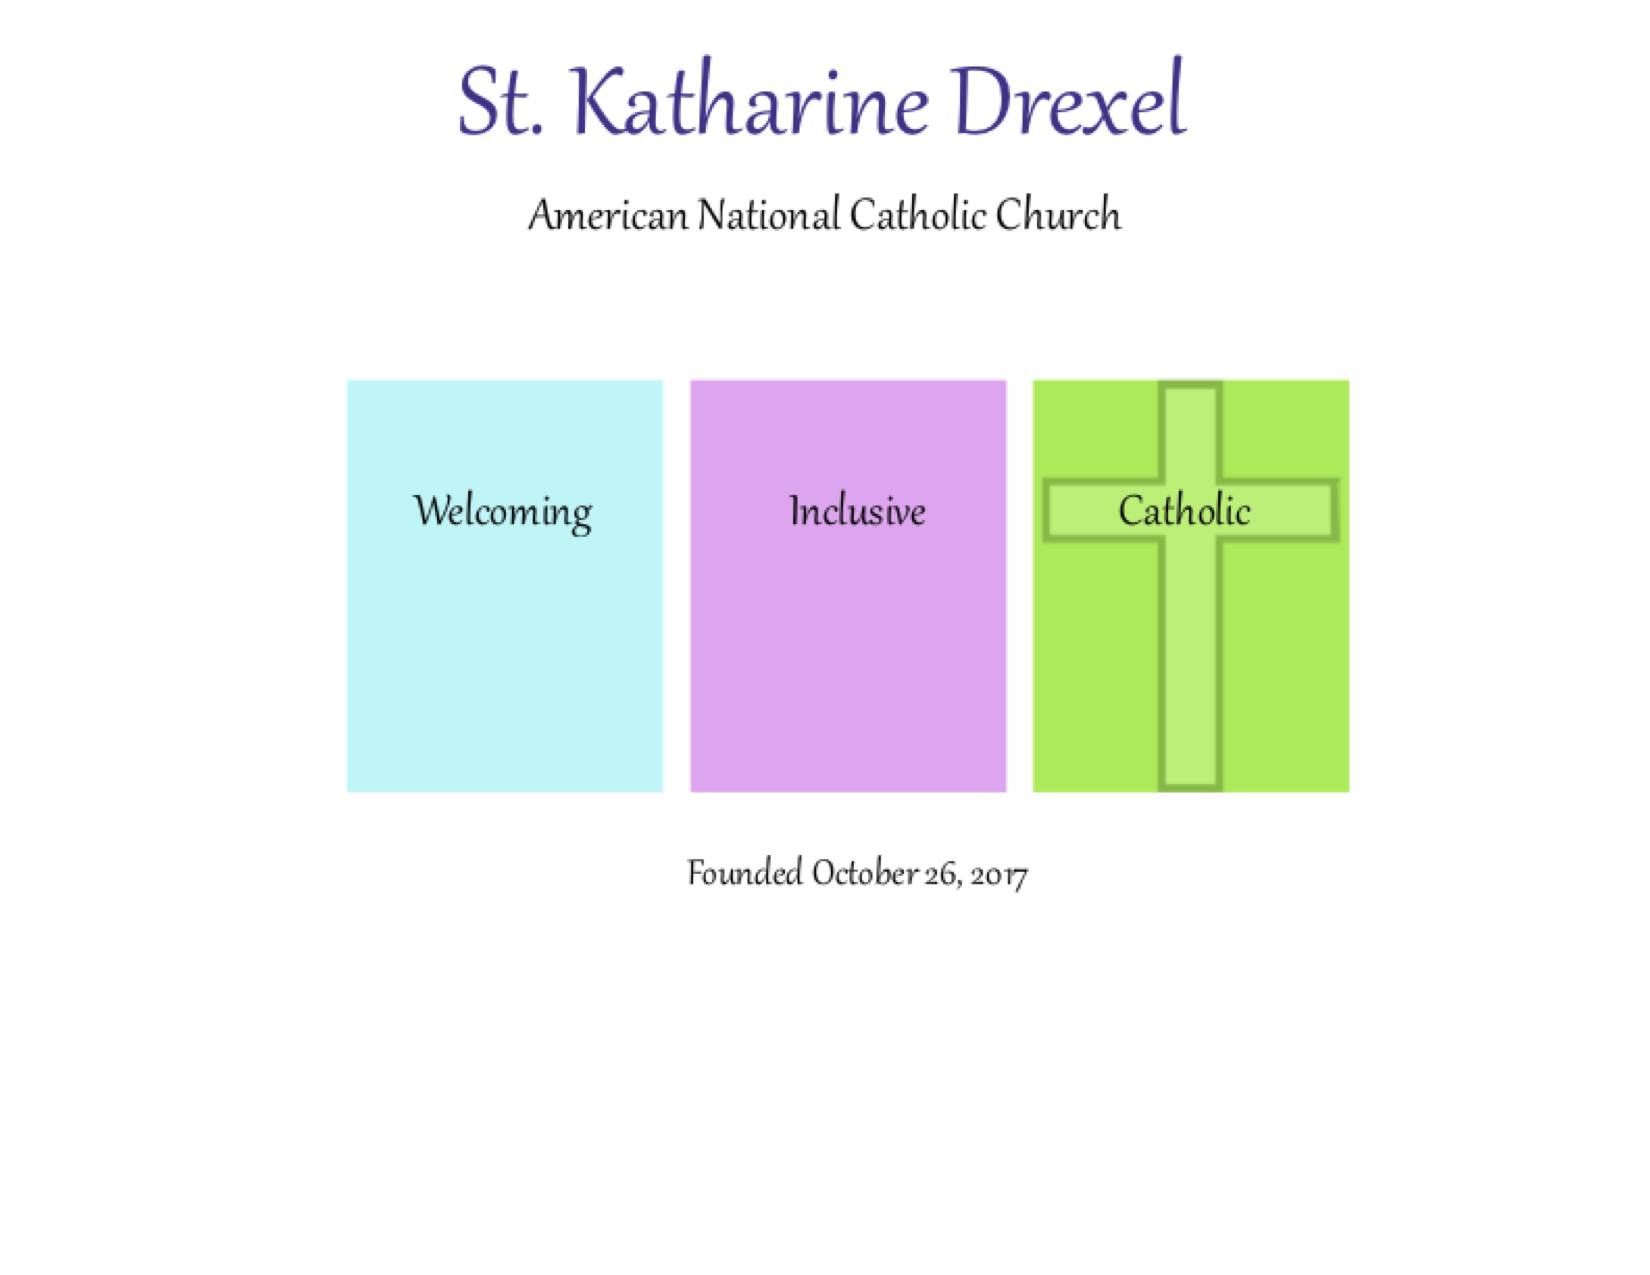 A parish of the American National Catholic Church